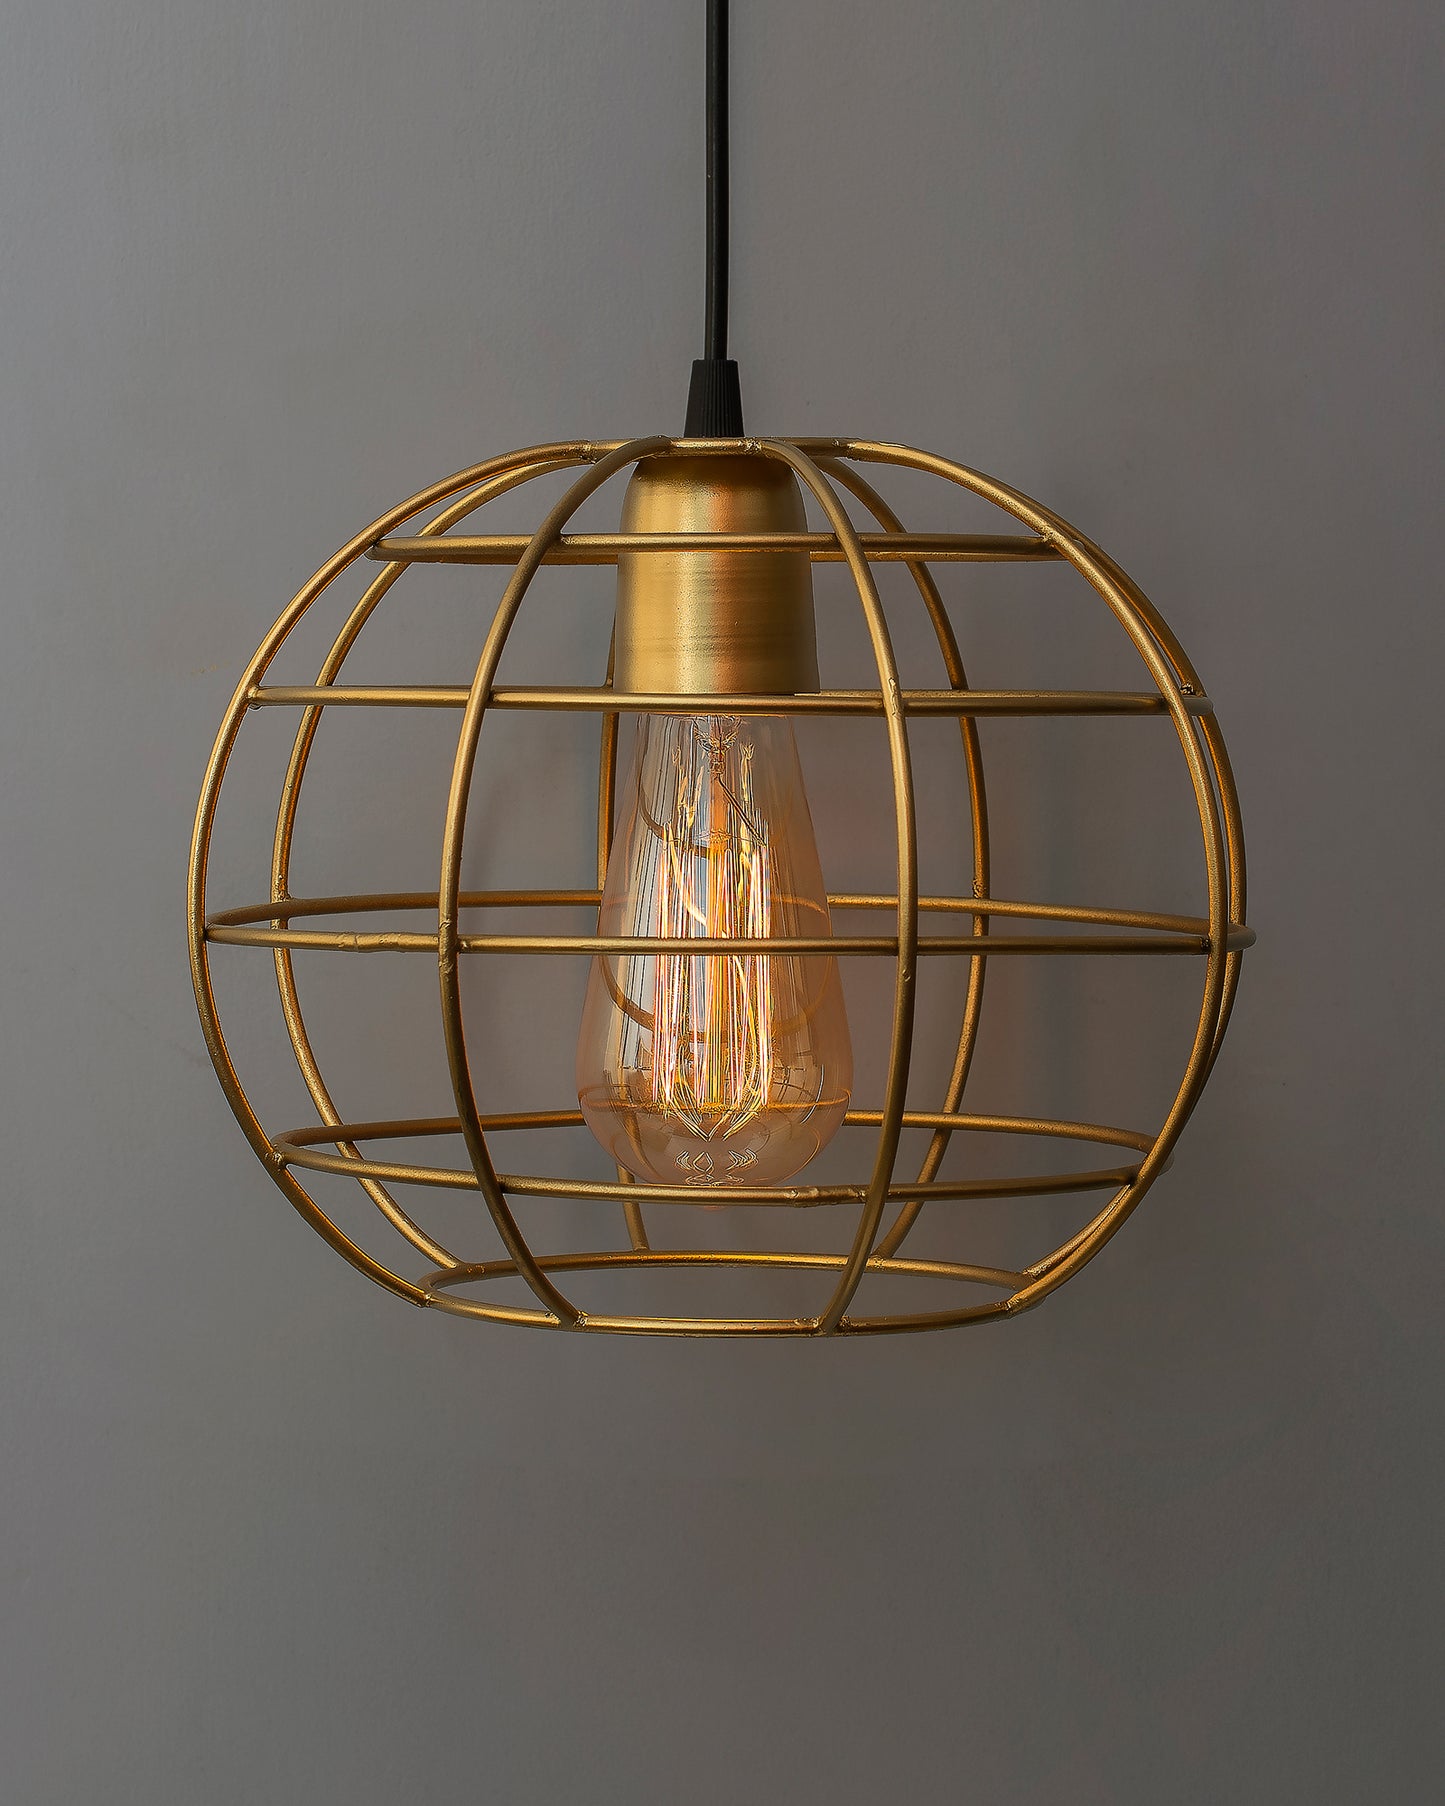 Golden Edison Filament hanging Classic Sphere, E27 hanging ceiling light for LED/filament bulb, decorative urban retro lighting